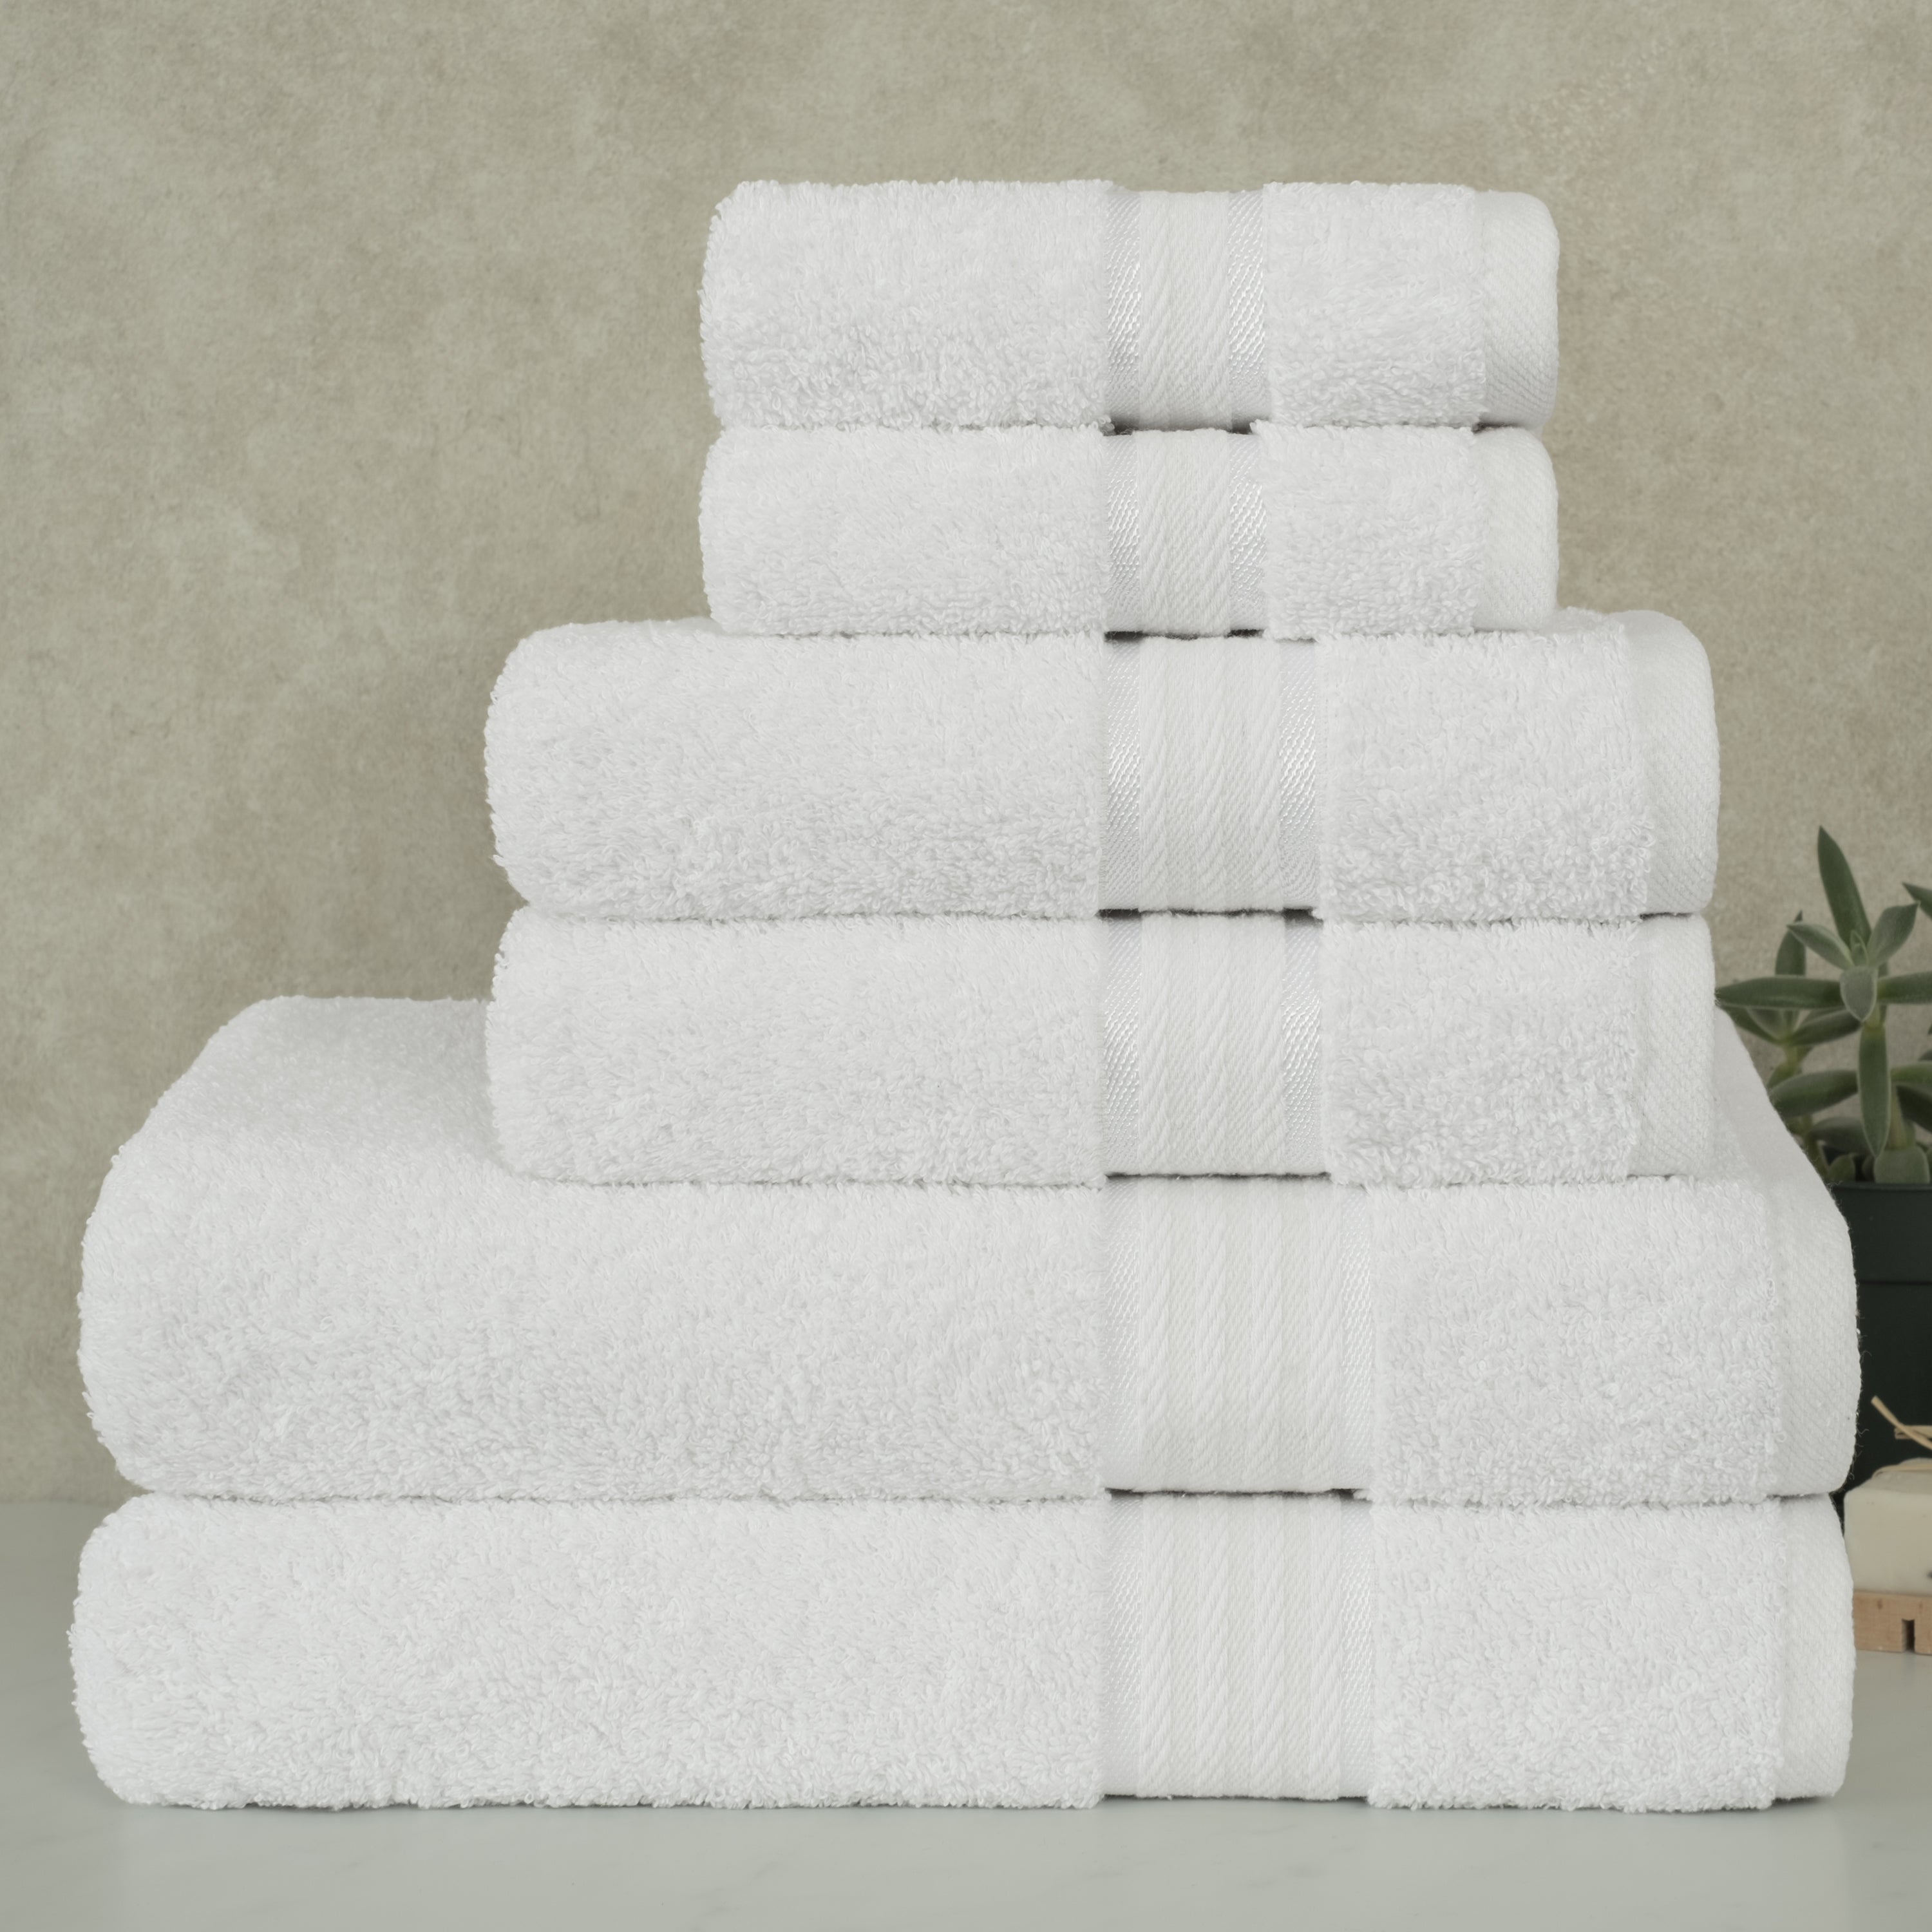 American Soft Linen - Salem 6 Piece Turkish Cotton Luxury Towel Set - White - 4